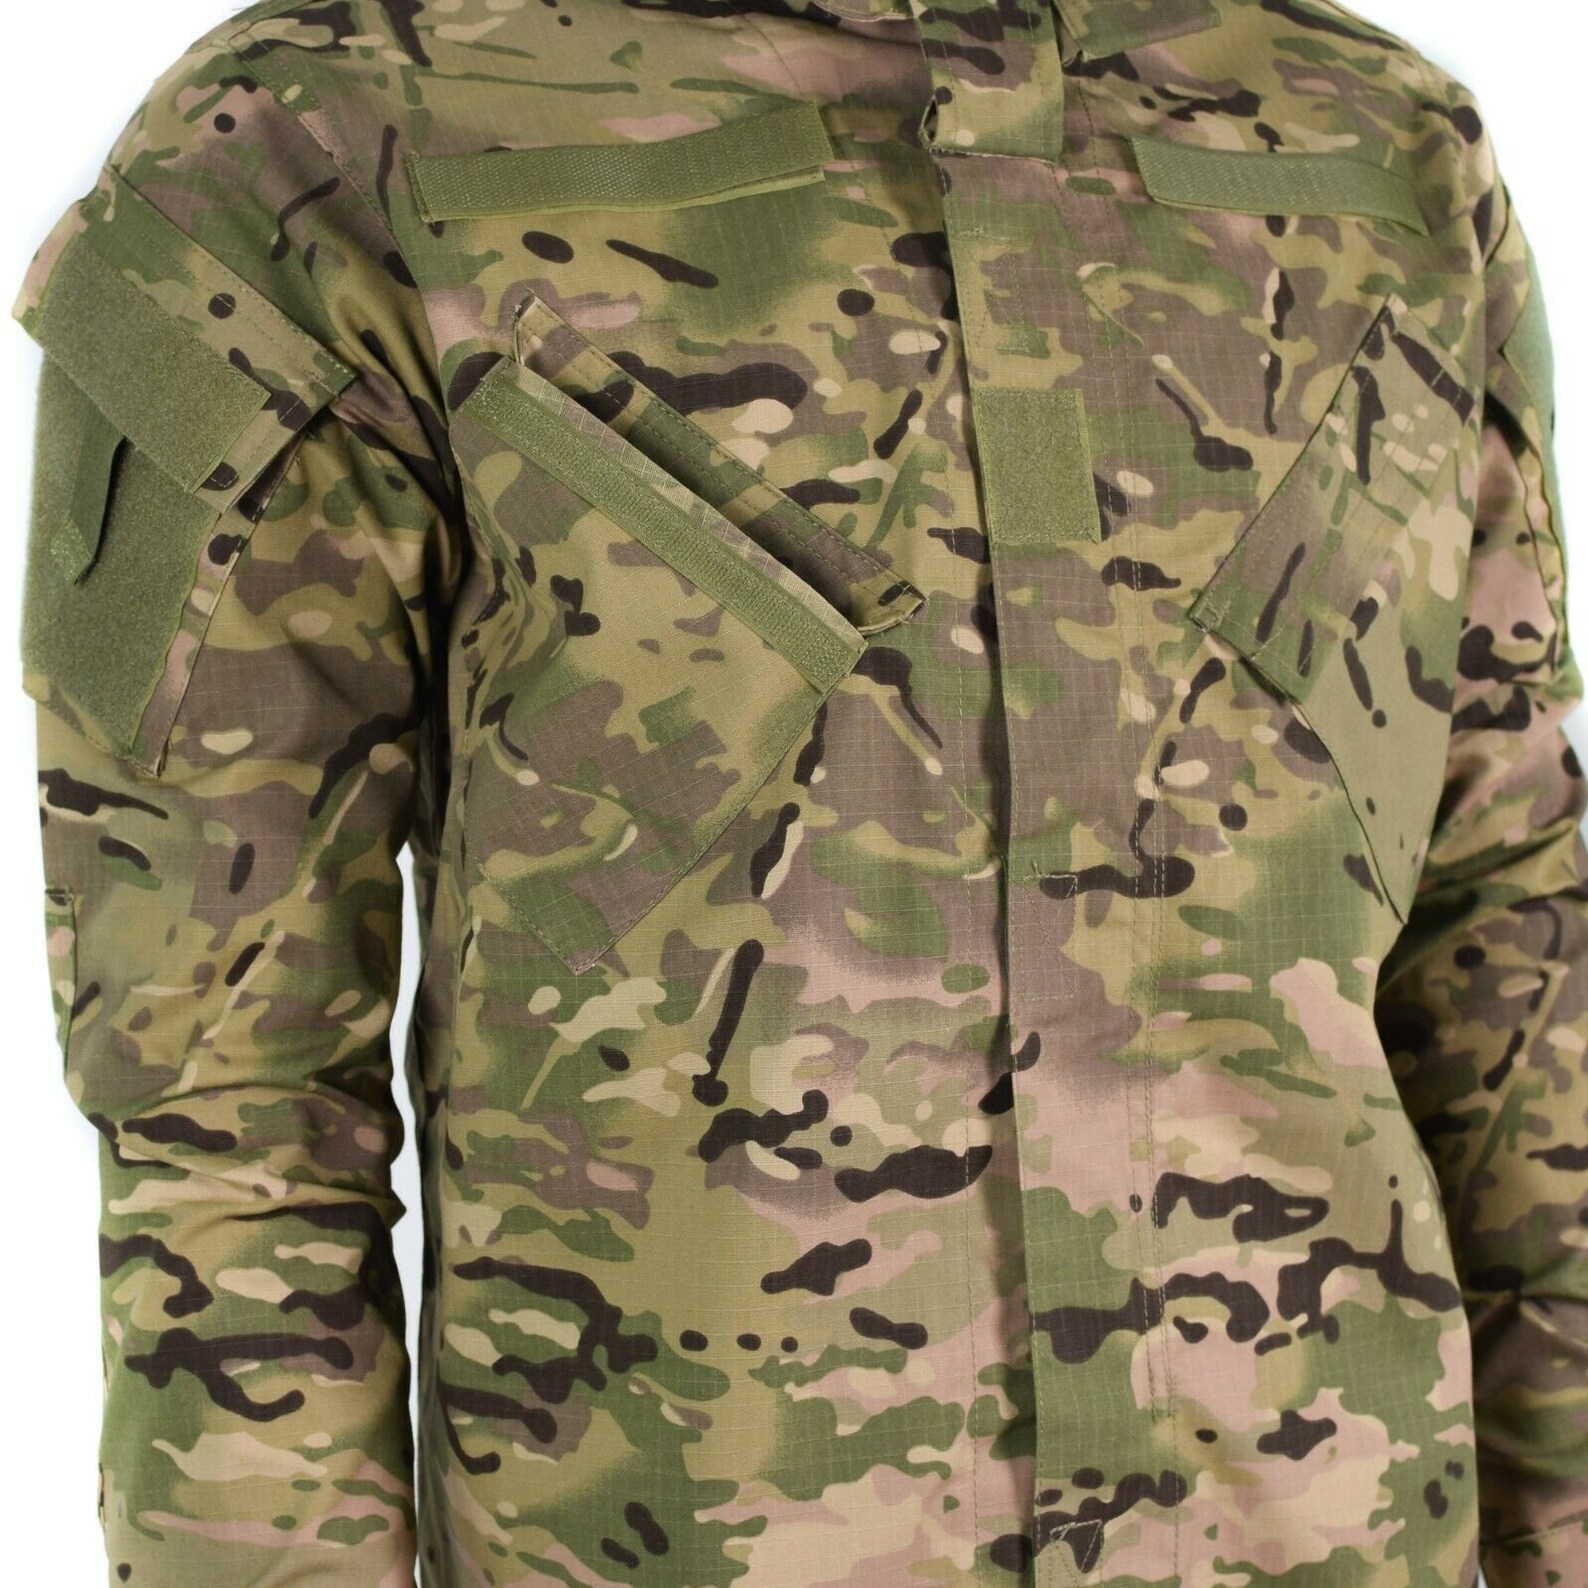 Original Ukrainian jacket Rip Stop MTP camouflage military | Etsy